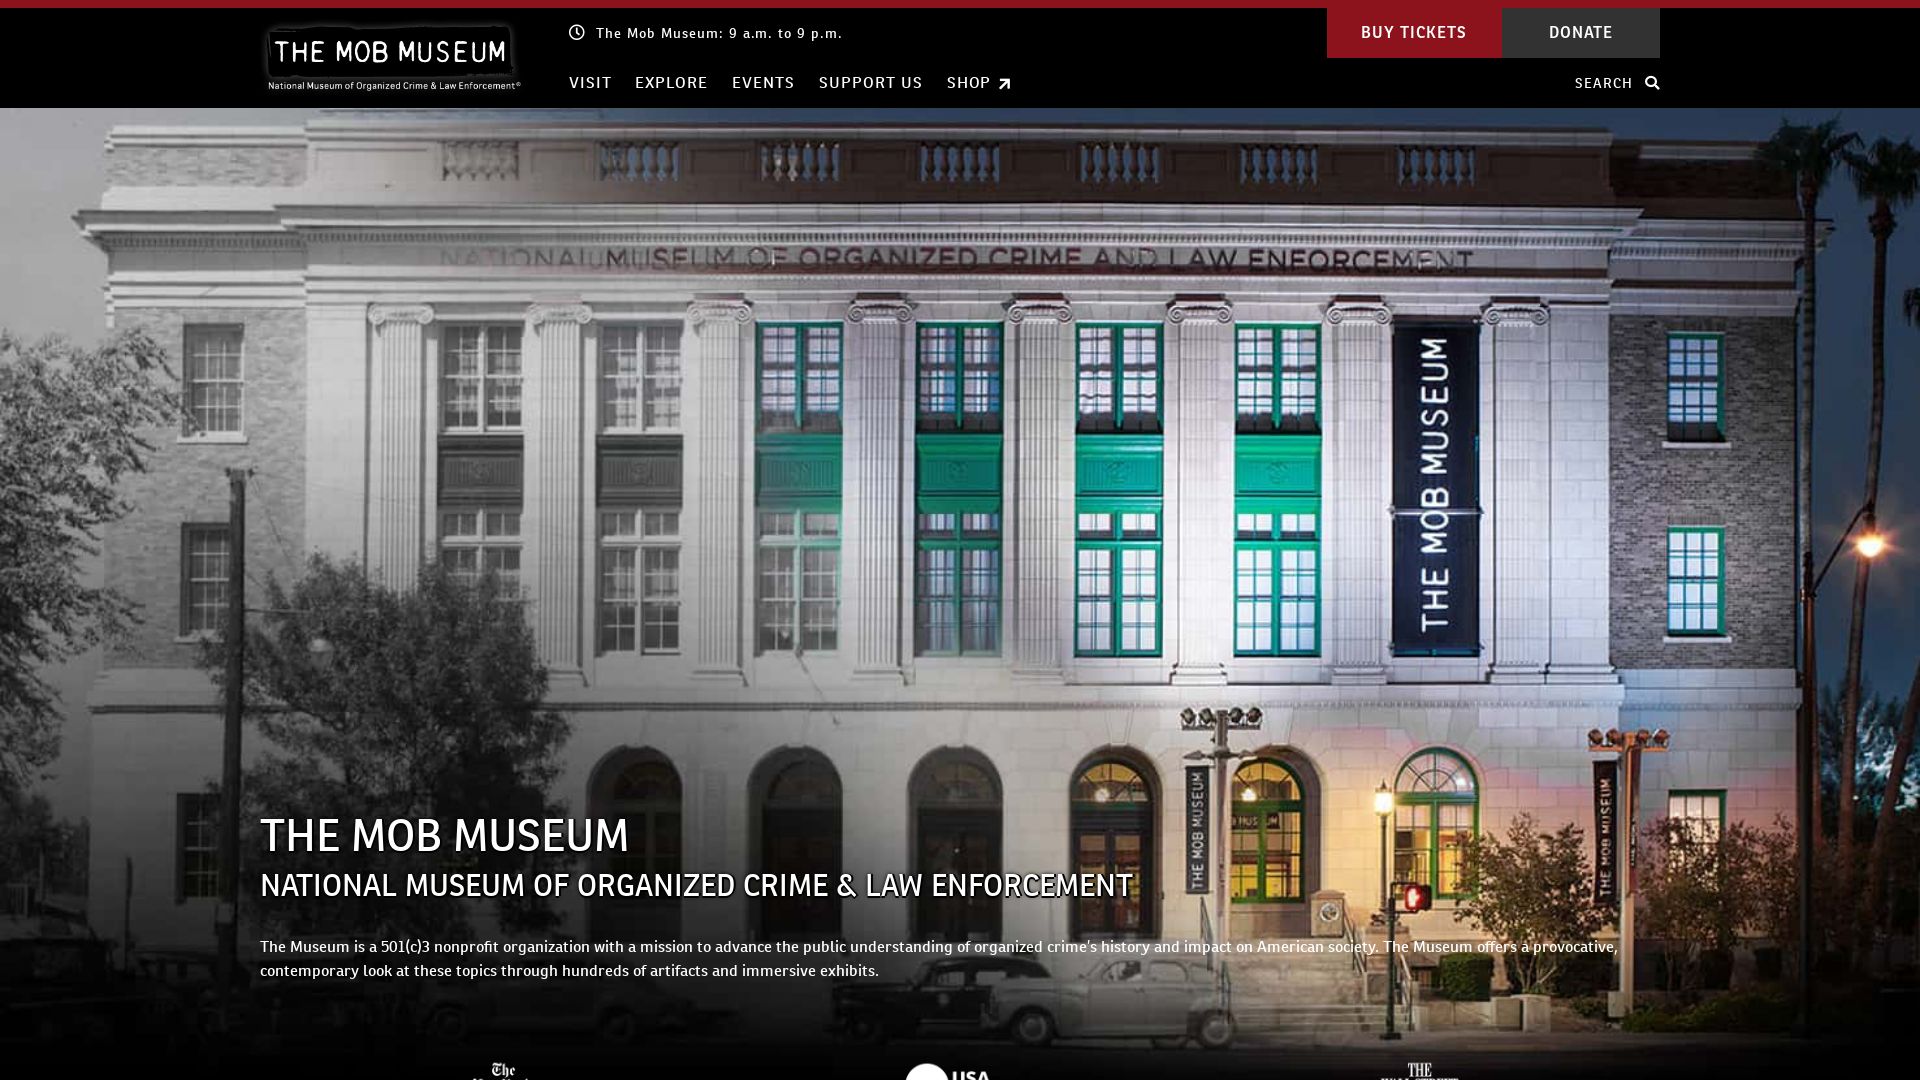 Webseitenstatus themobmuseum.org ist   ONLINE